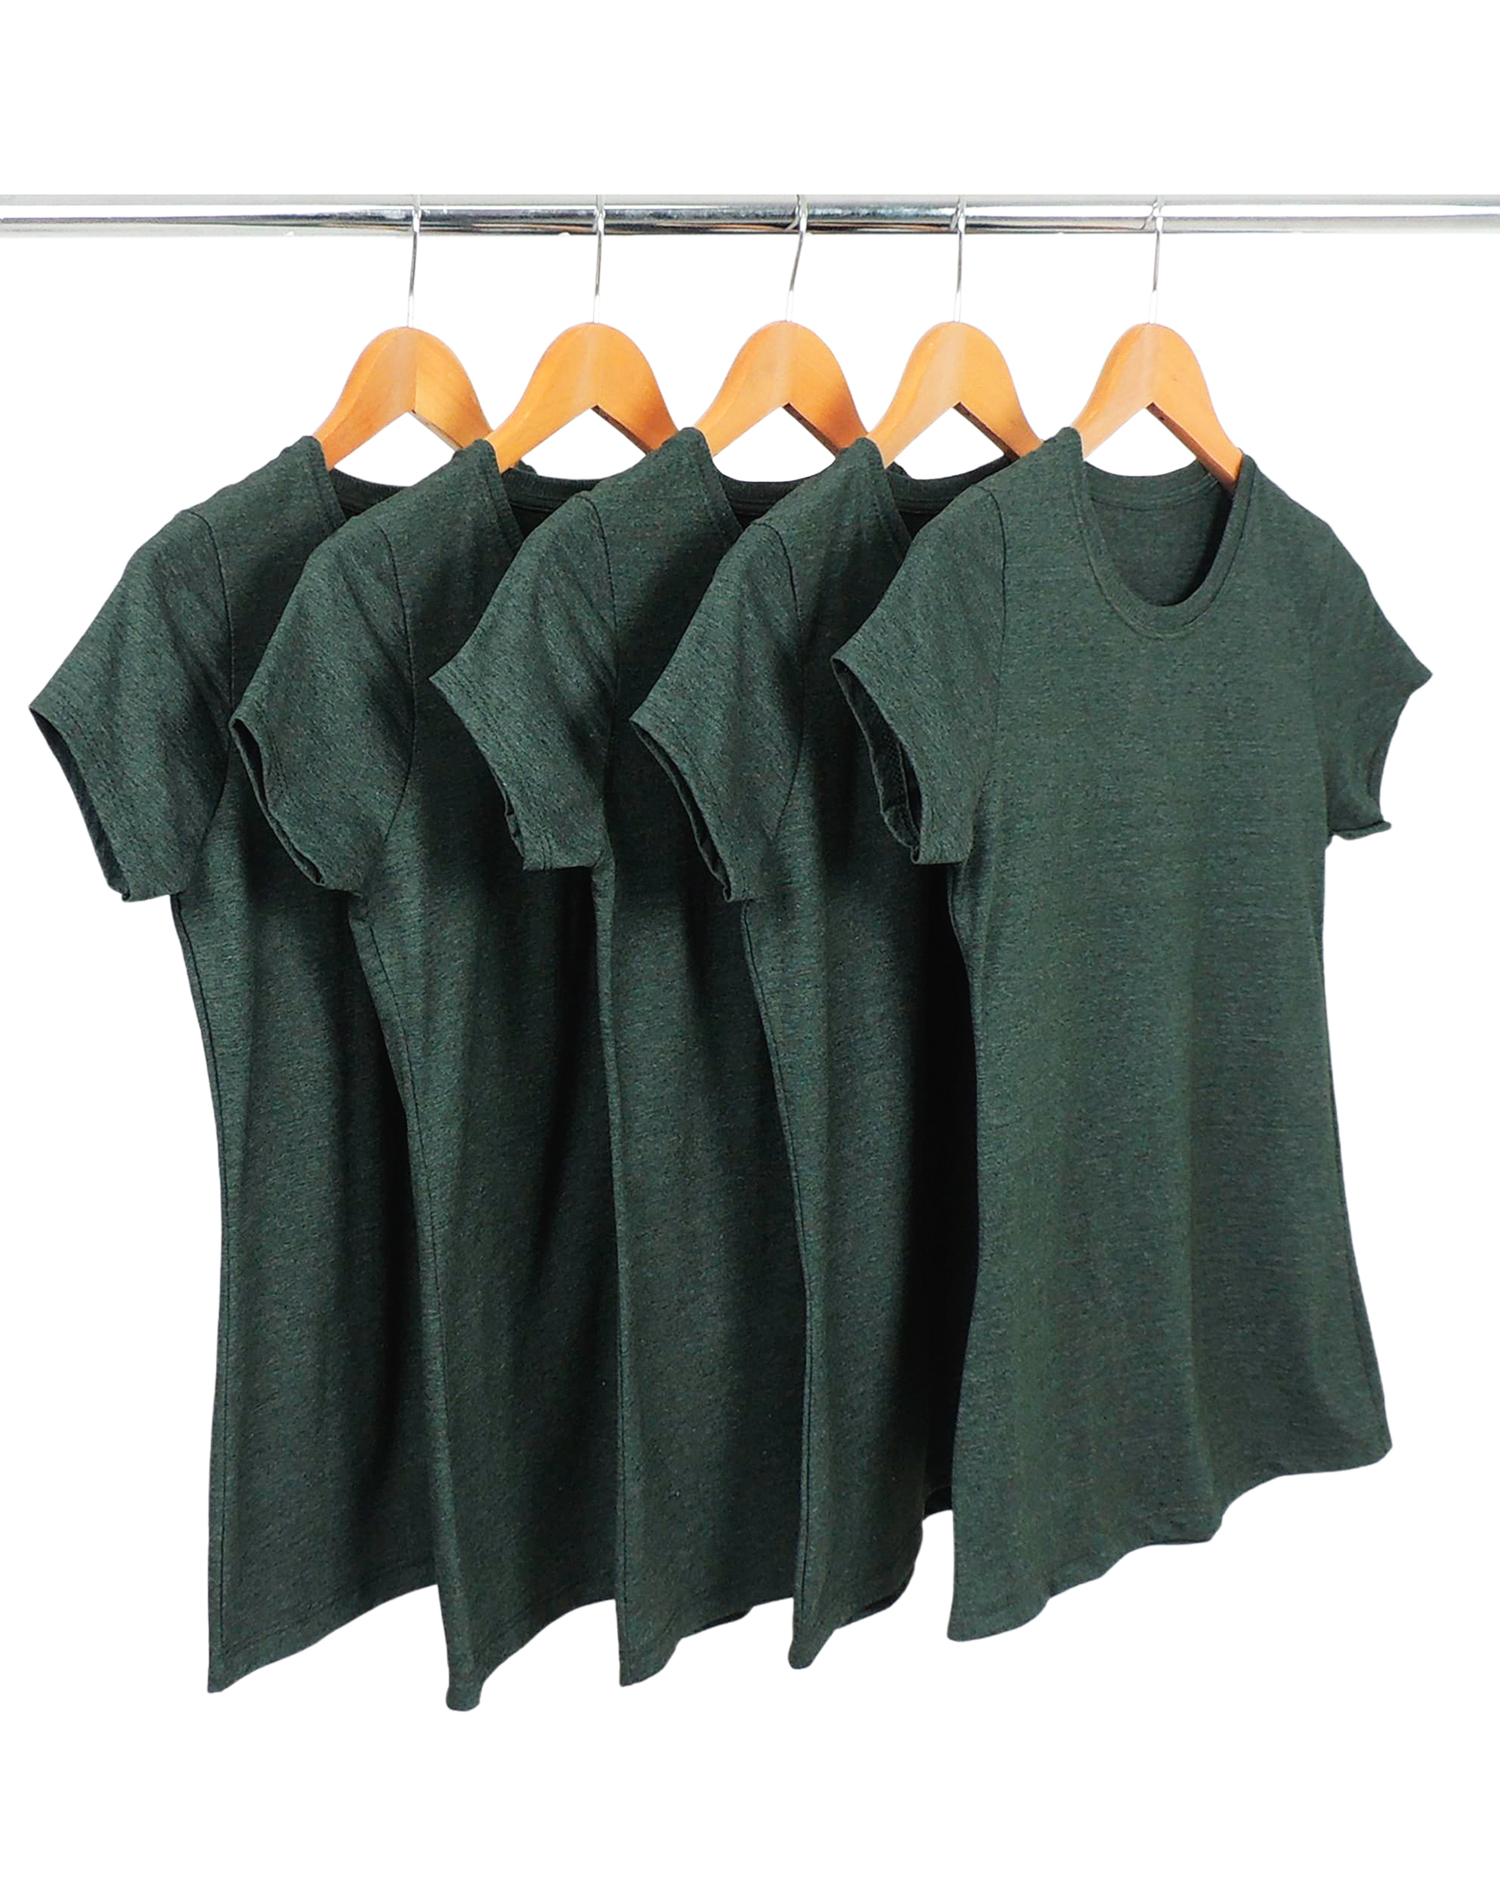 Kit 5 Camisetas Femininas Comfort Mescla Verde Oliva